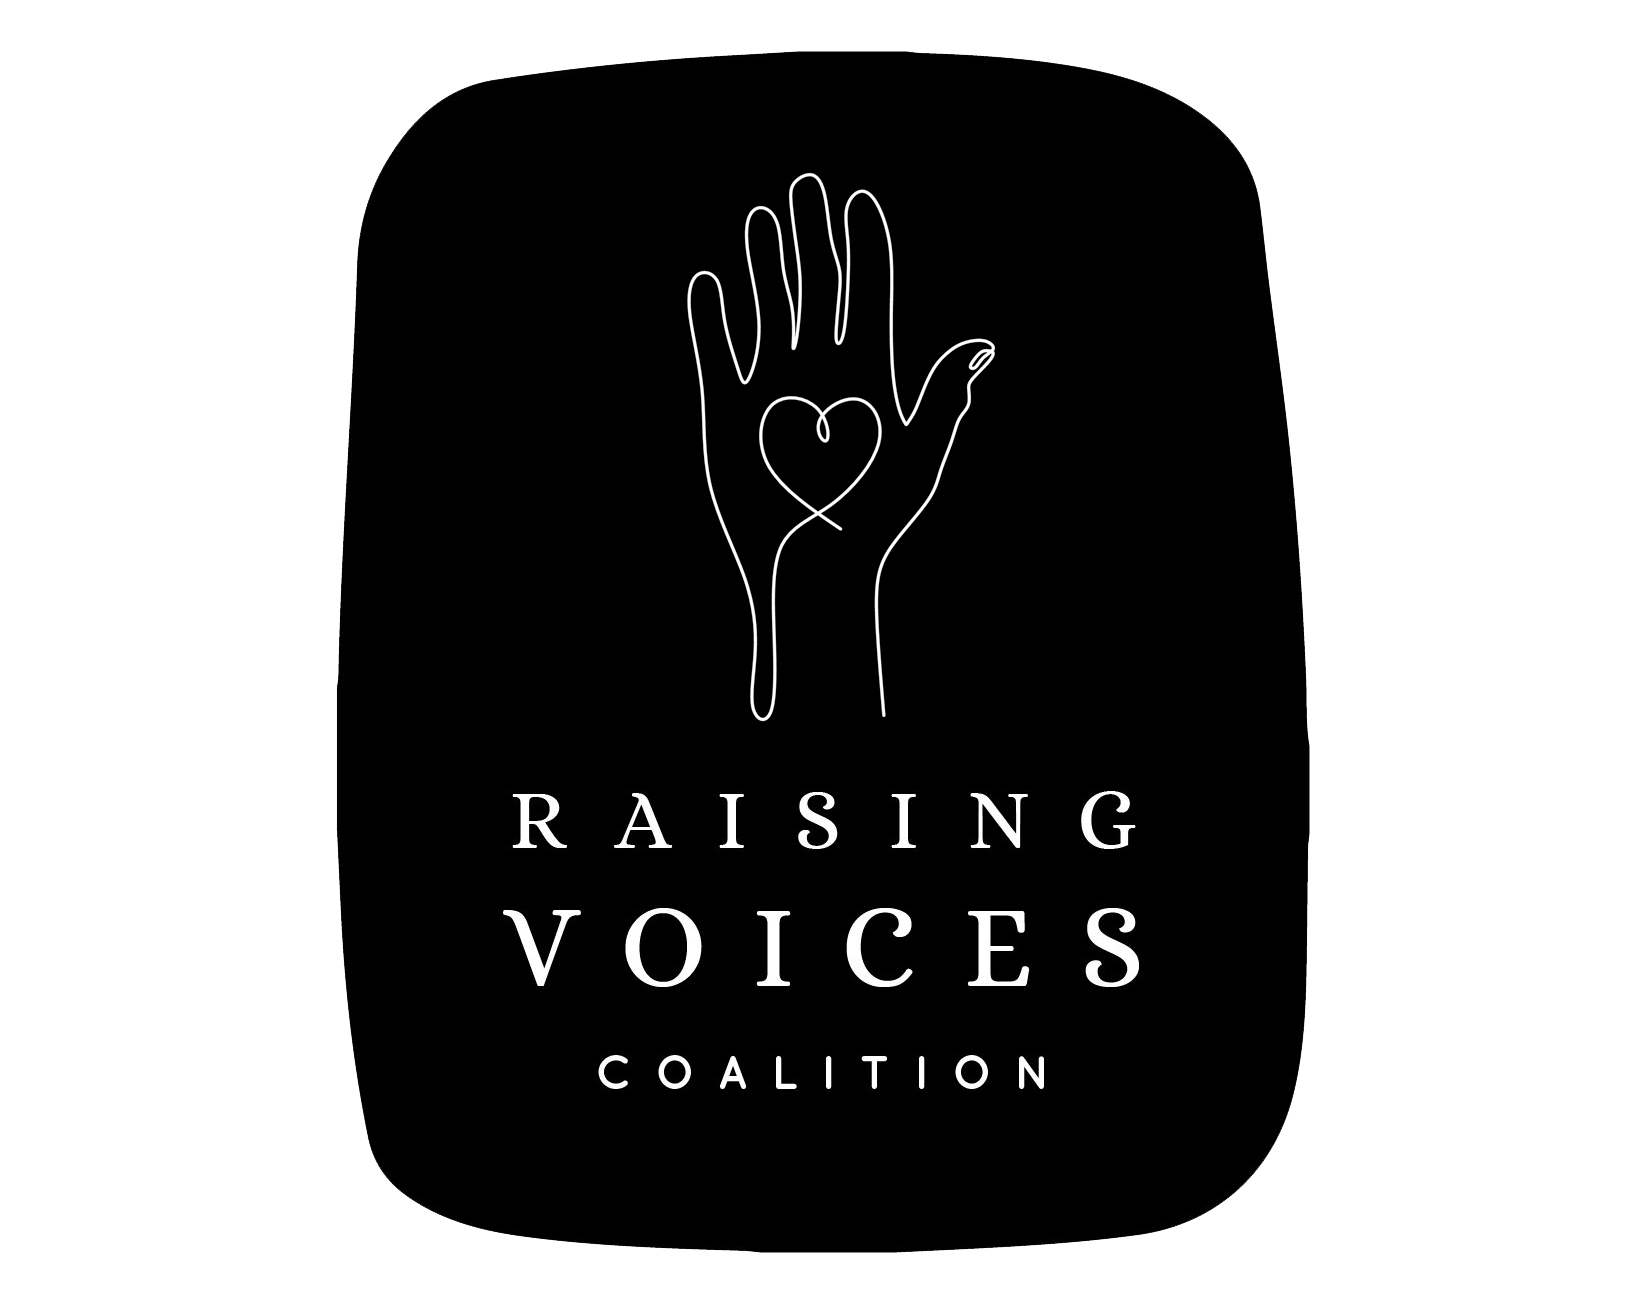 Raising Voices Coalition